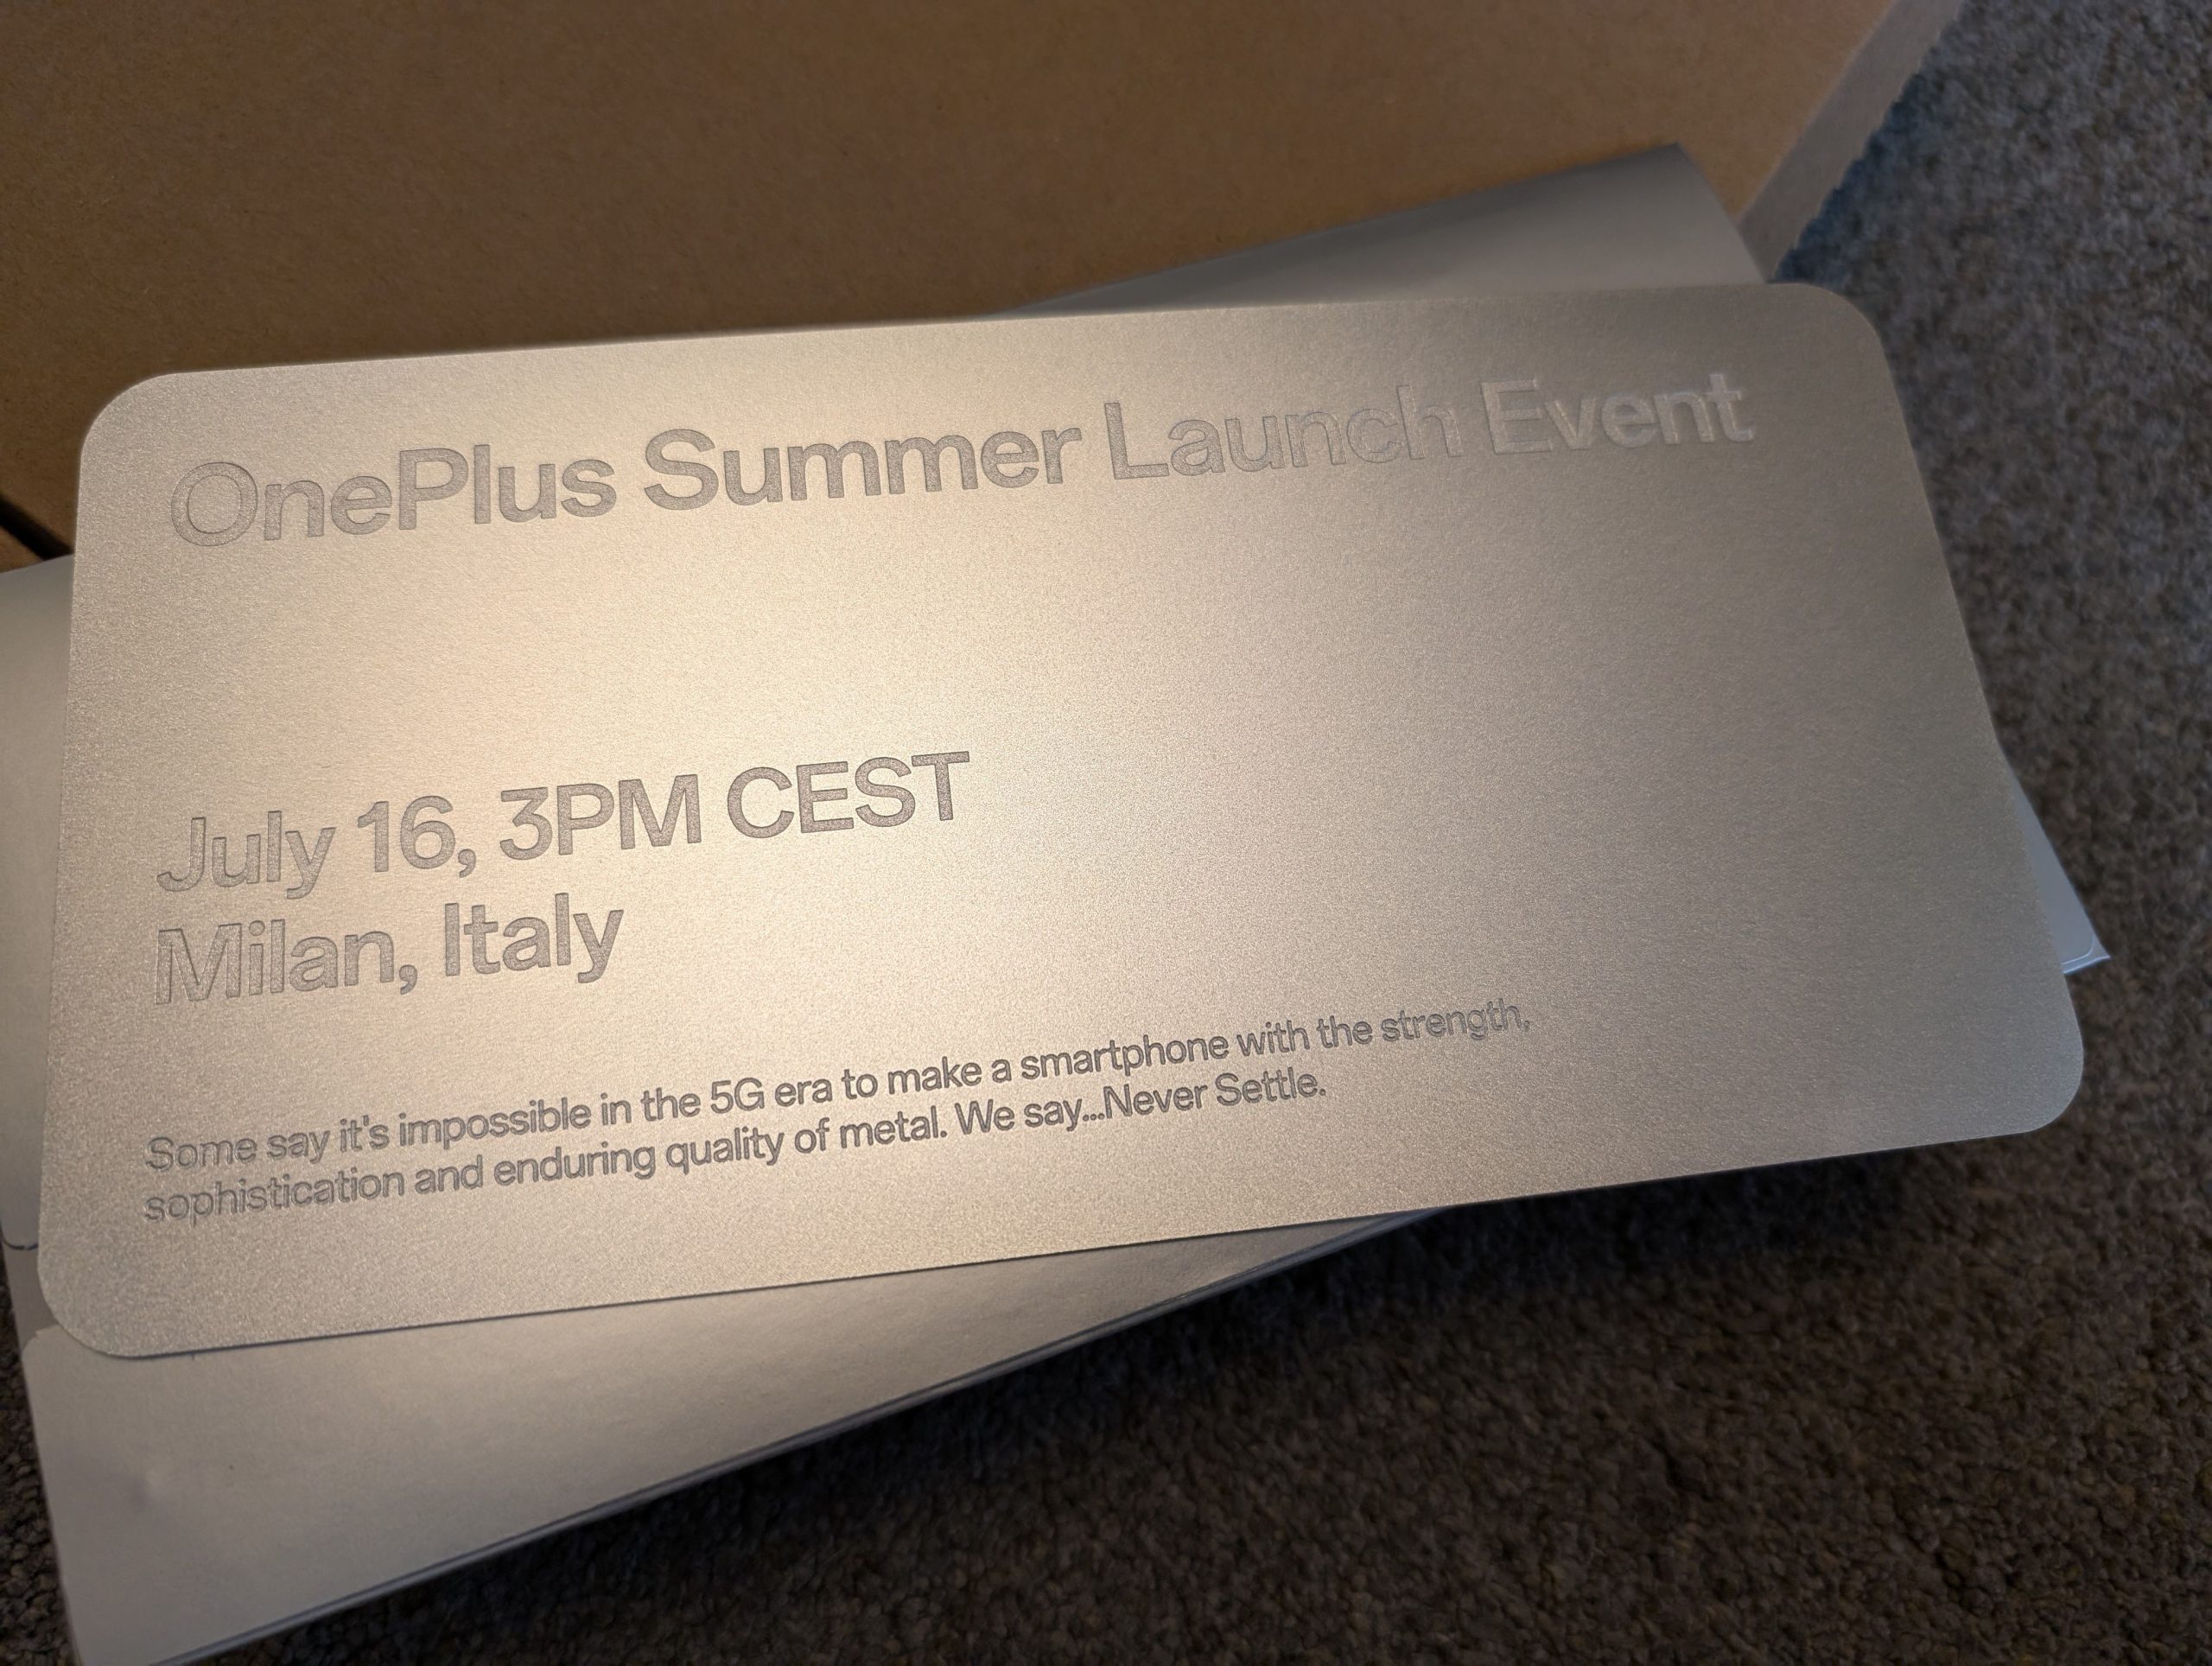 OnePlus Invite to Summer event